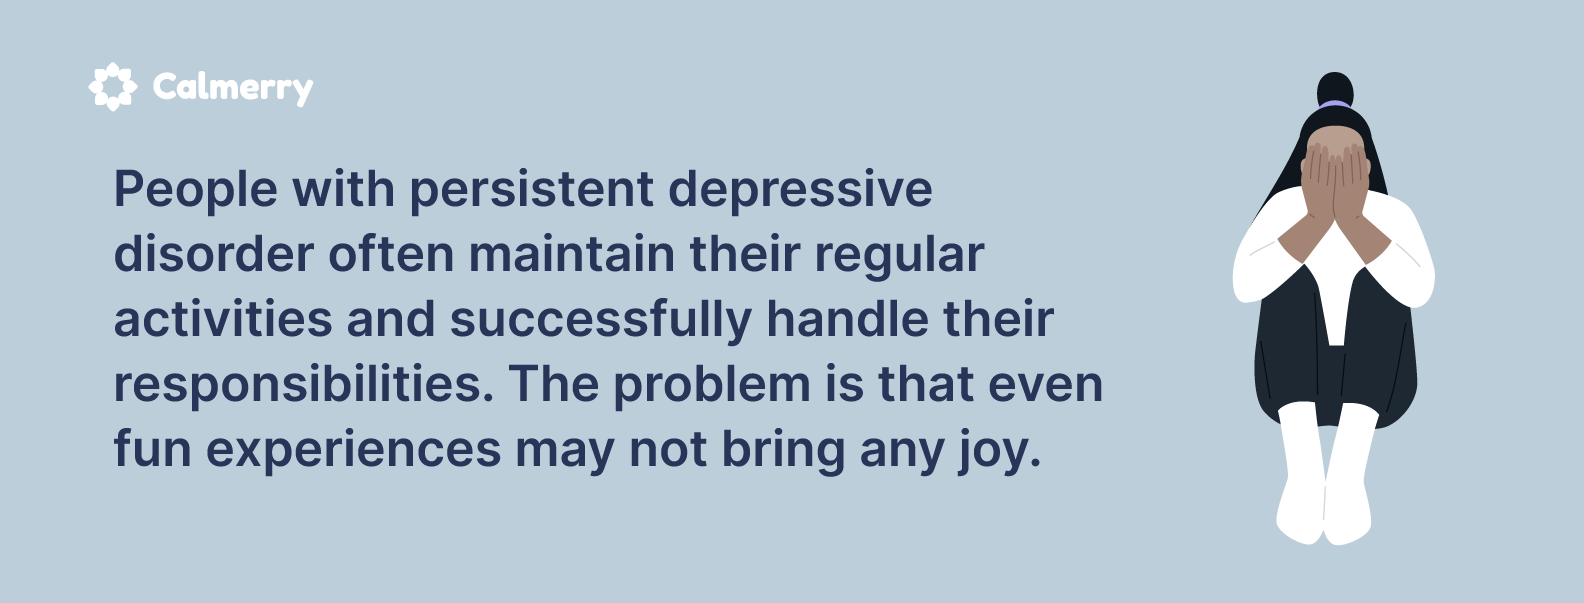 Persistent depressive disorder